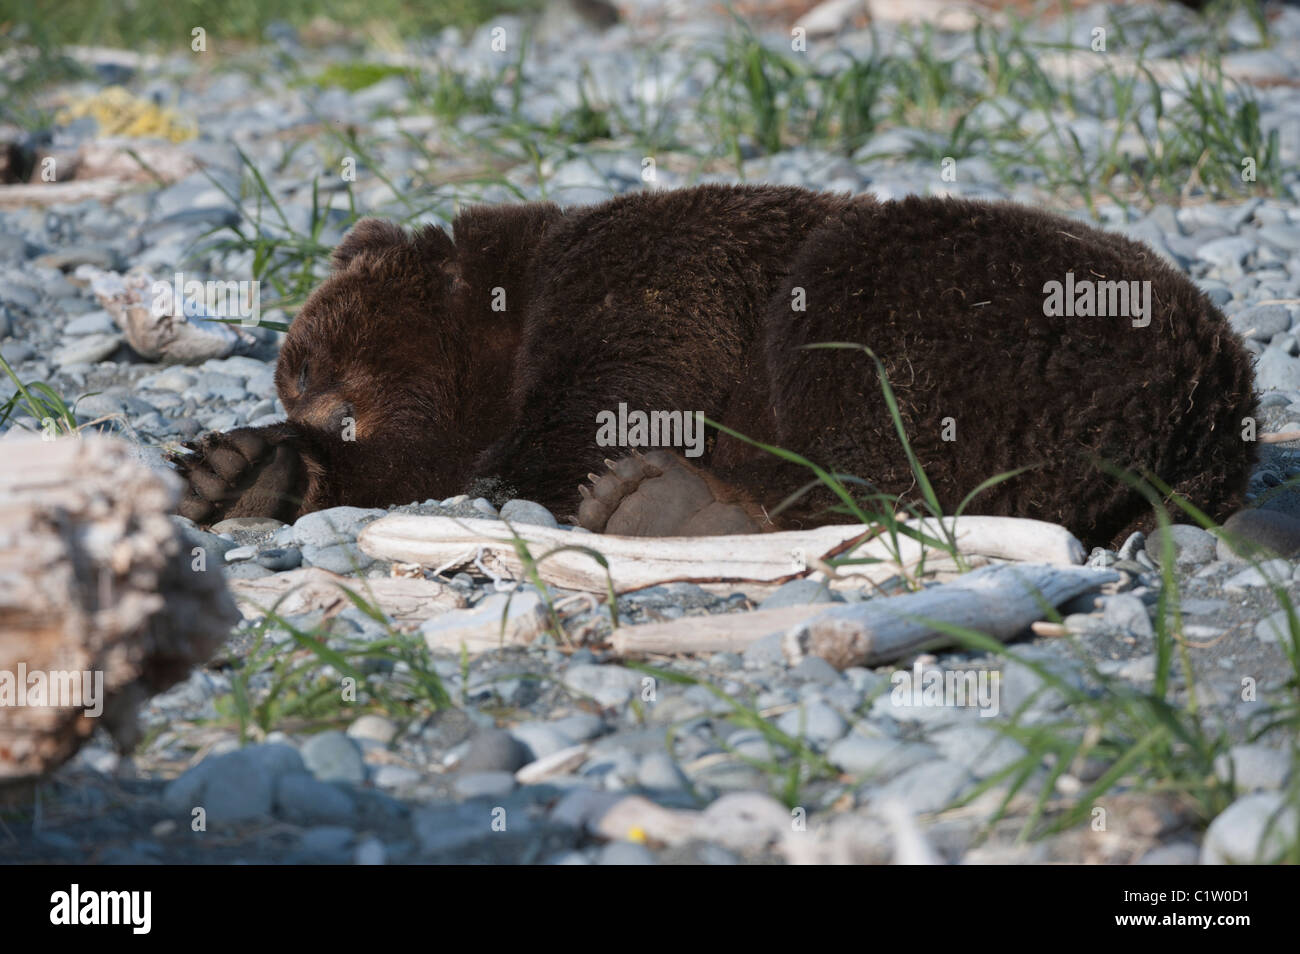 Kodiak brown bear (Ursus arctos middendorffi) resting, Swikshak, Katami Coast, Alaska, USA Stock Photo